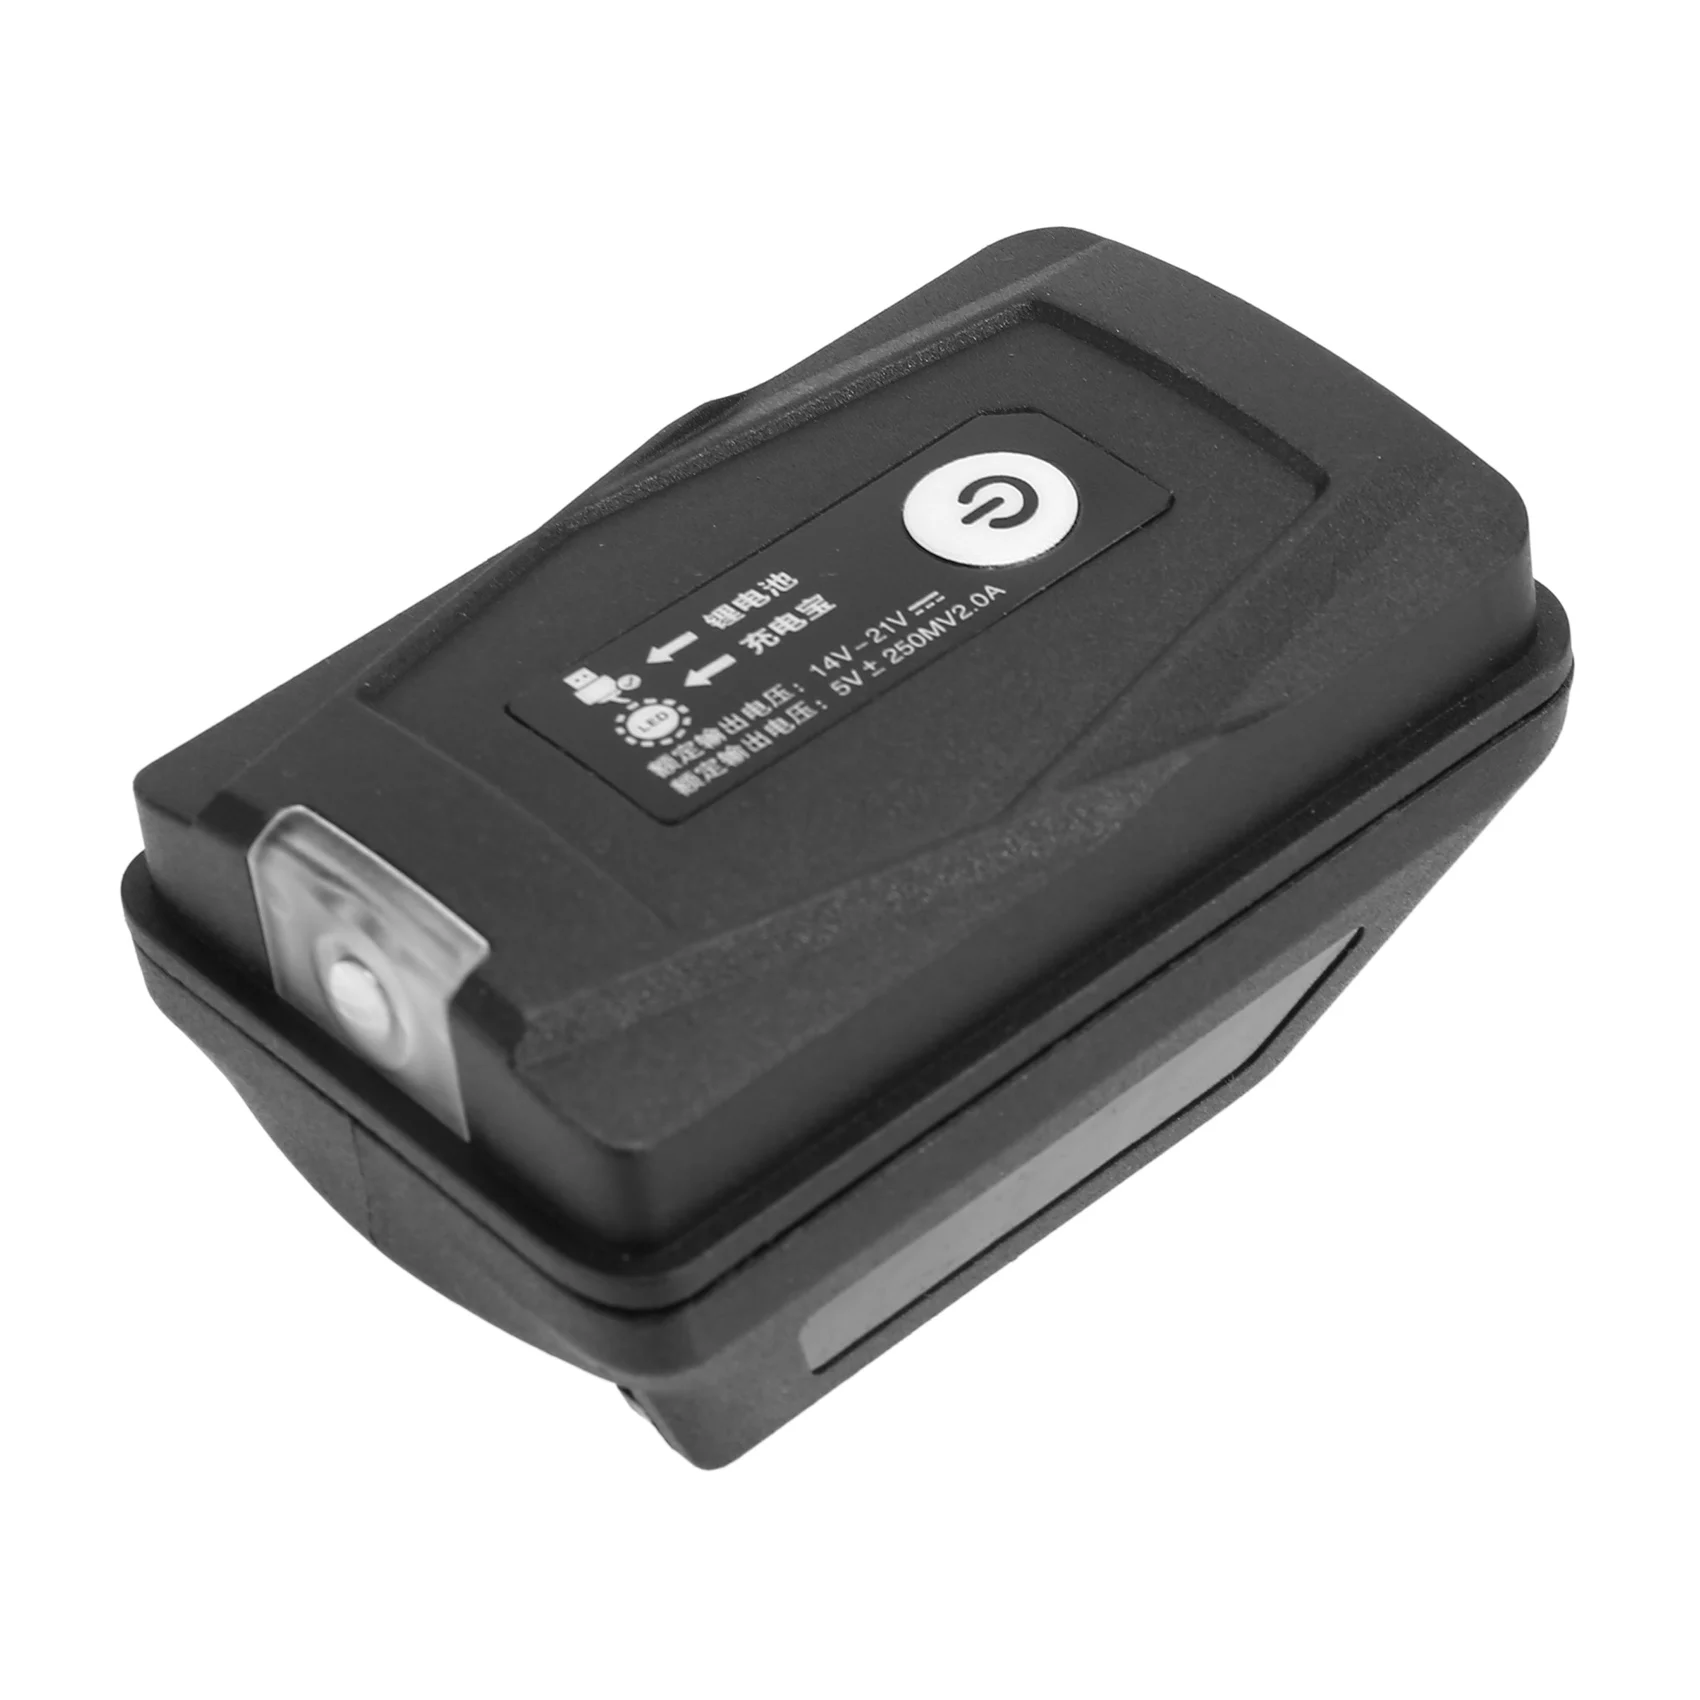 

Adapter Light Lamp Flashlight Torch USB Mobile Phone Charger for Worx Orange 4 Pin Socket 20V Li-Ion Battery Power Bank